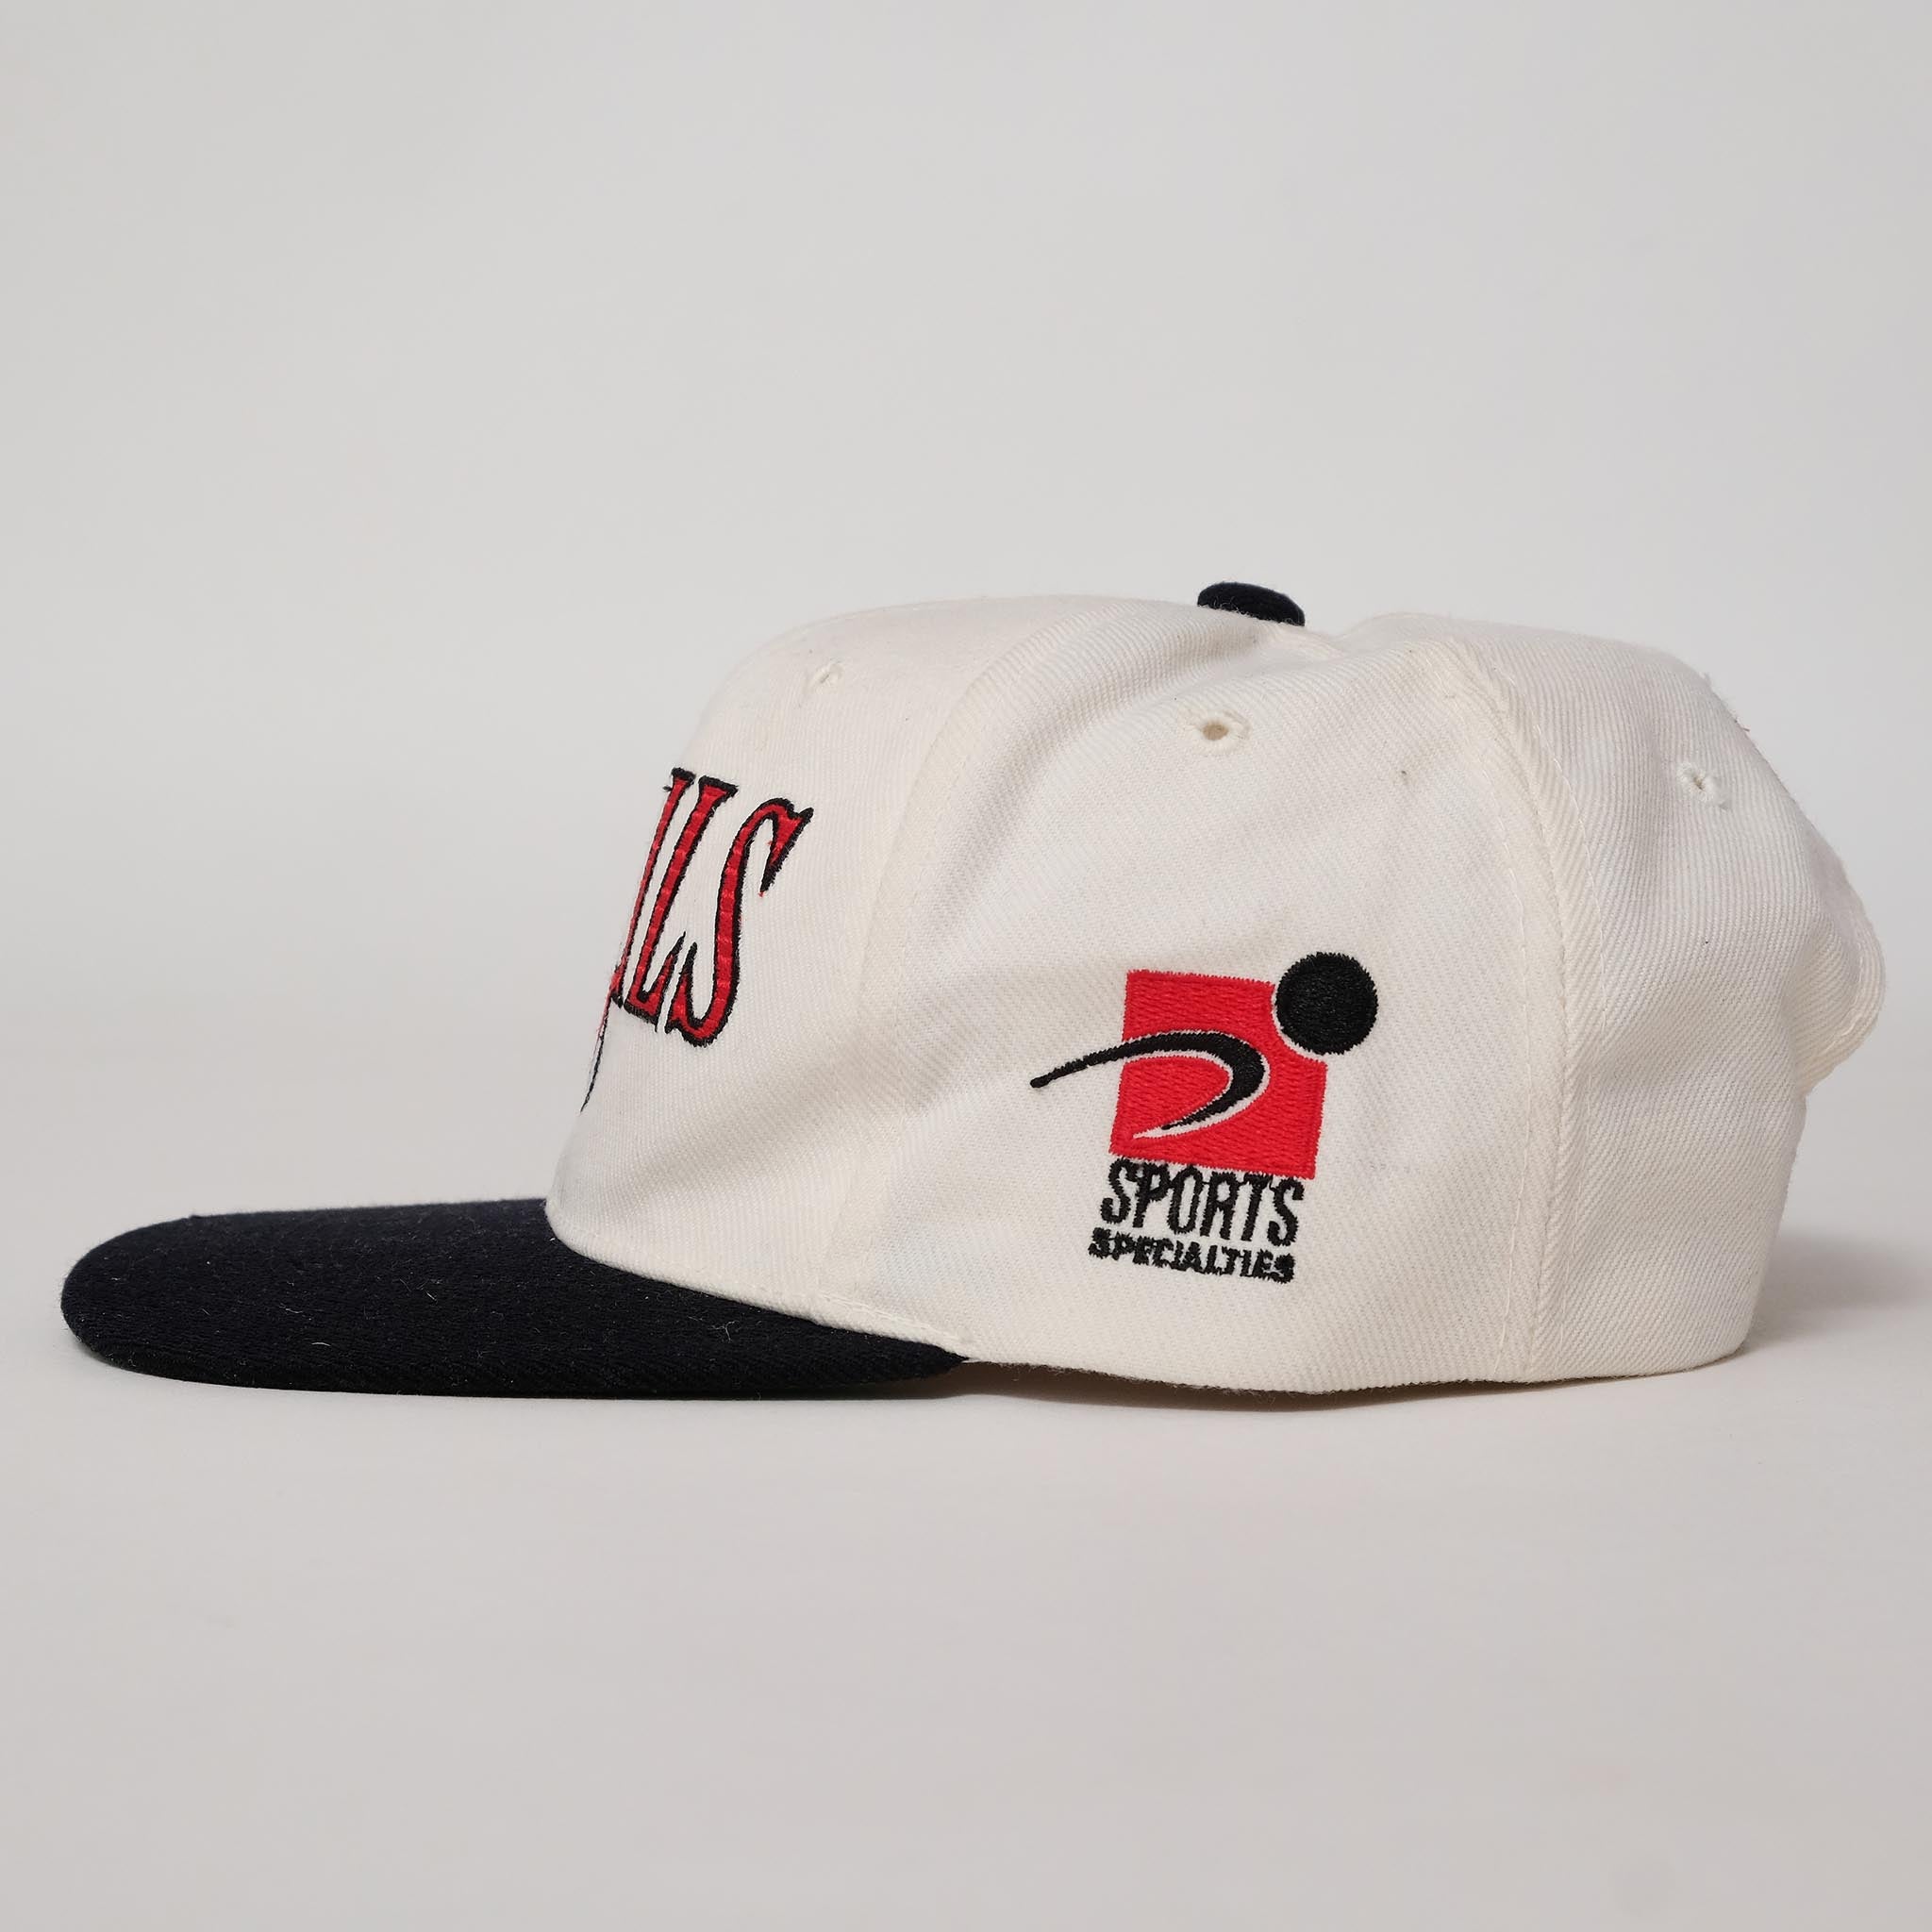 90's New Jersey Devils NHL Snapback Hat – Rare VNTG